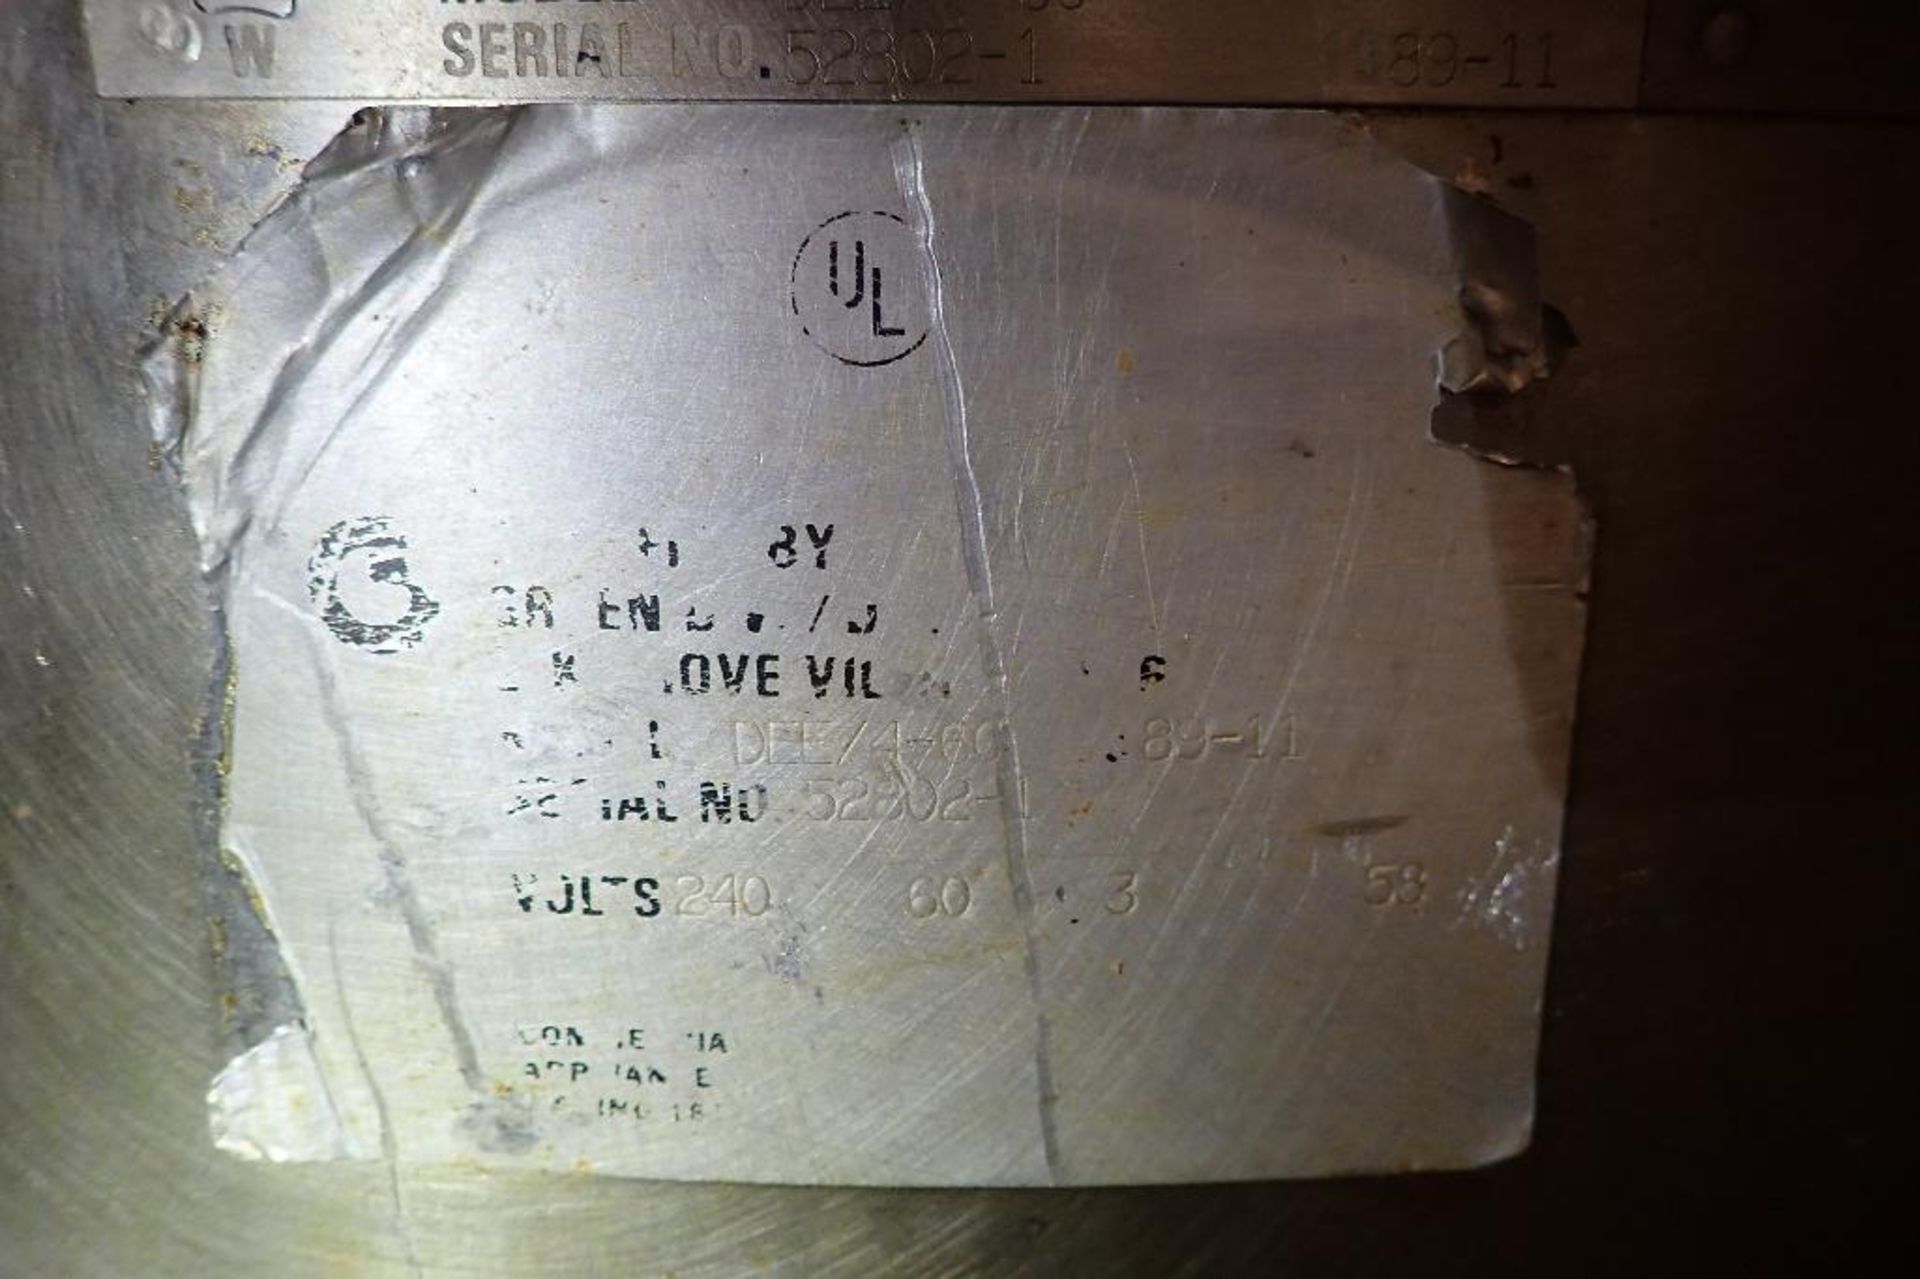 1989 Groen SS tilt kettle, Model DEE/4-60, SN 52082-1, jacketed, 50 psi @ 300 F, 30 in. dia x 24 in. - Image 6 of 10